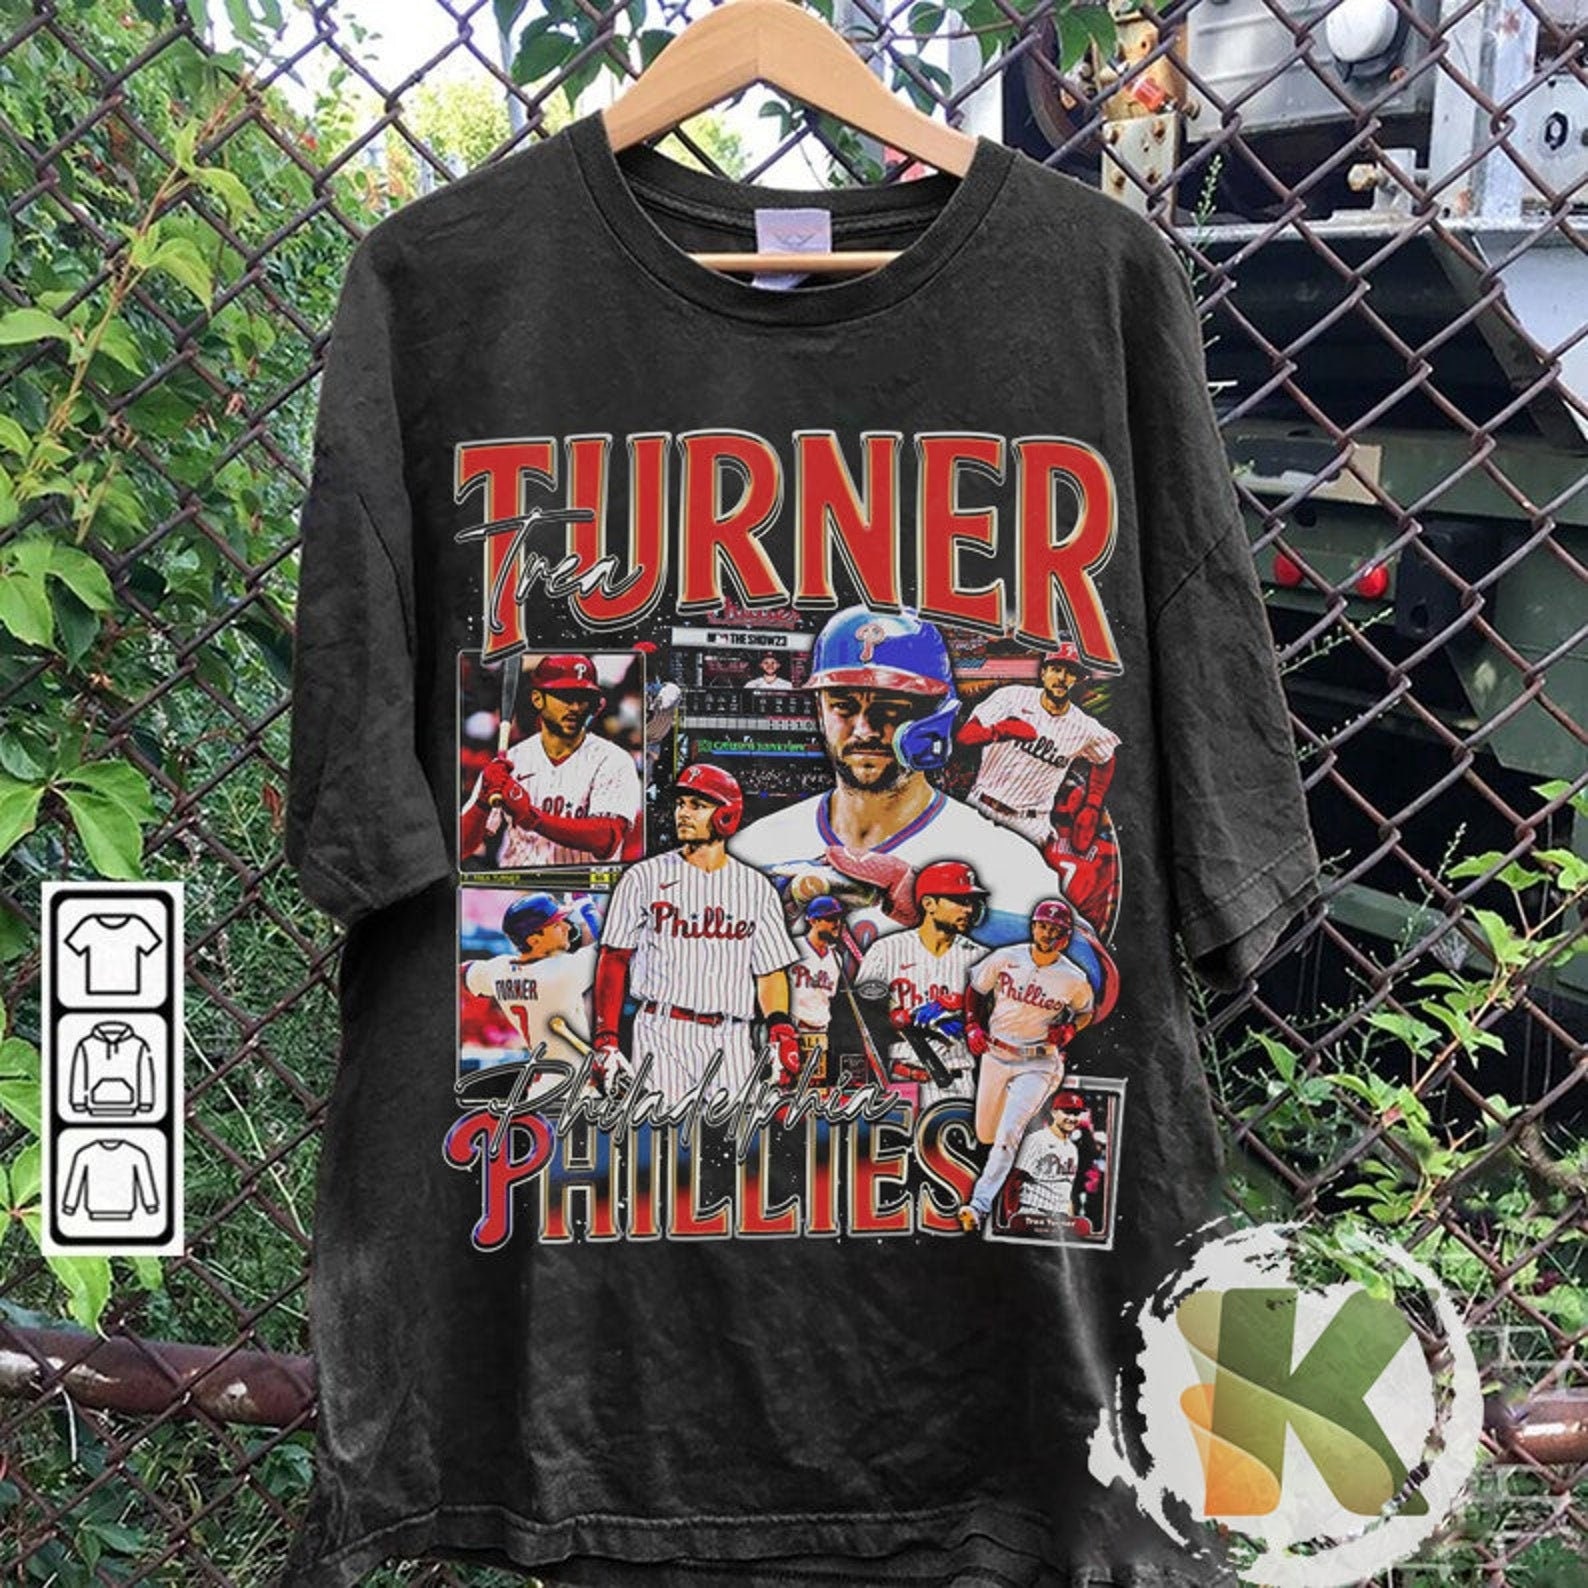 Freddie Freeman Women's T-Shirt - Heather Gray - Los Angeles | 500 Level Major League Baseball Players Association (MLBPA)